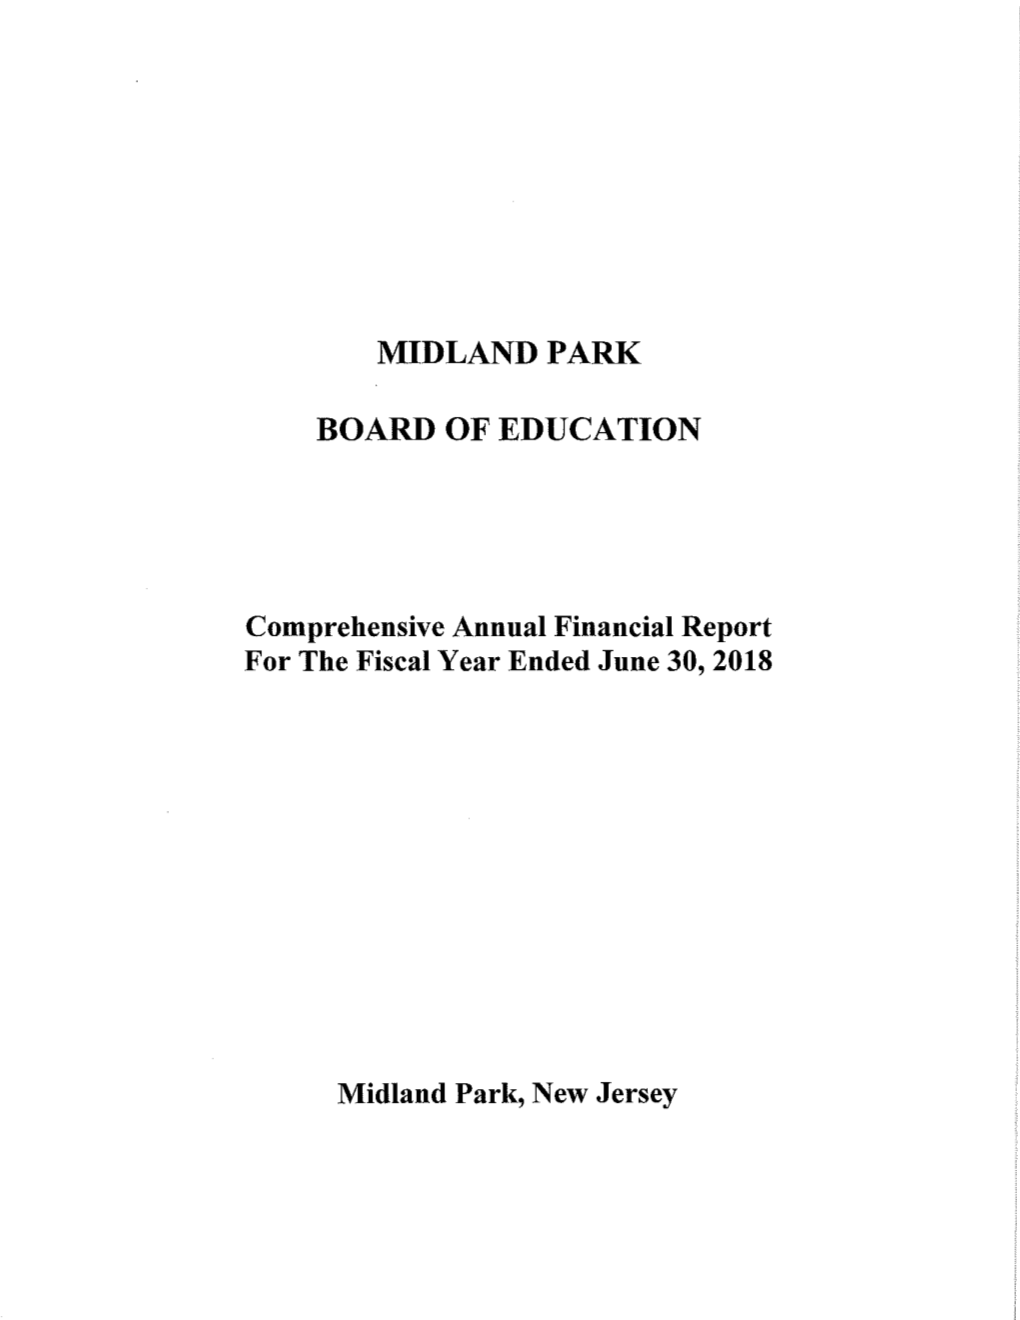 Midland Park Board of Education